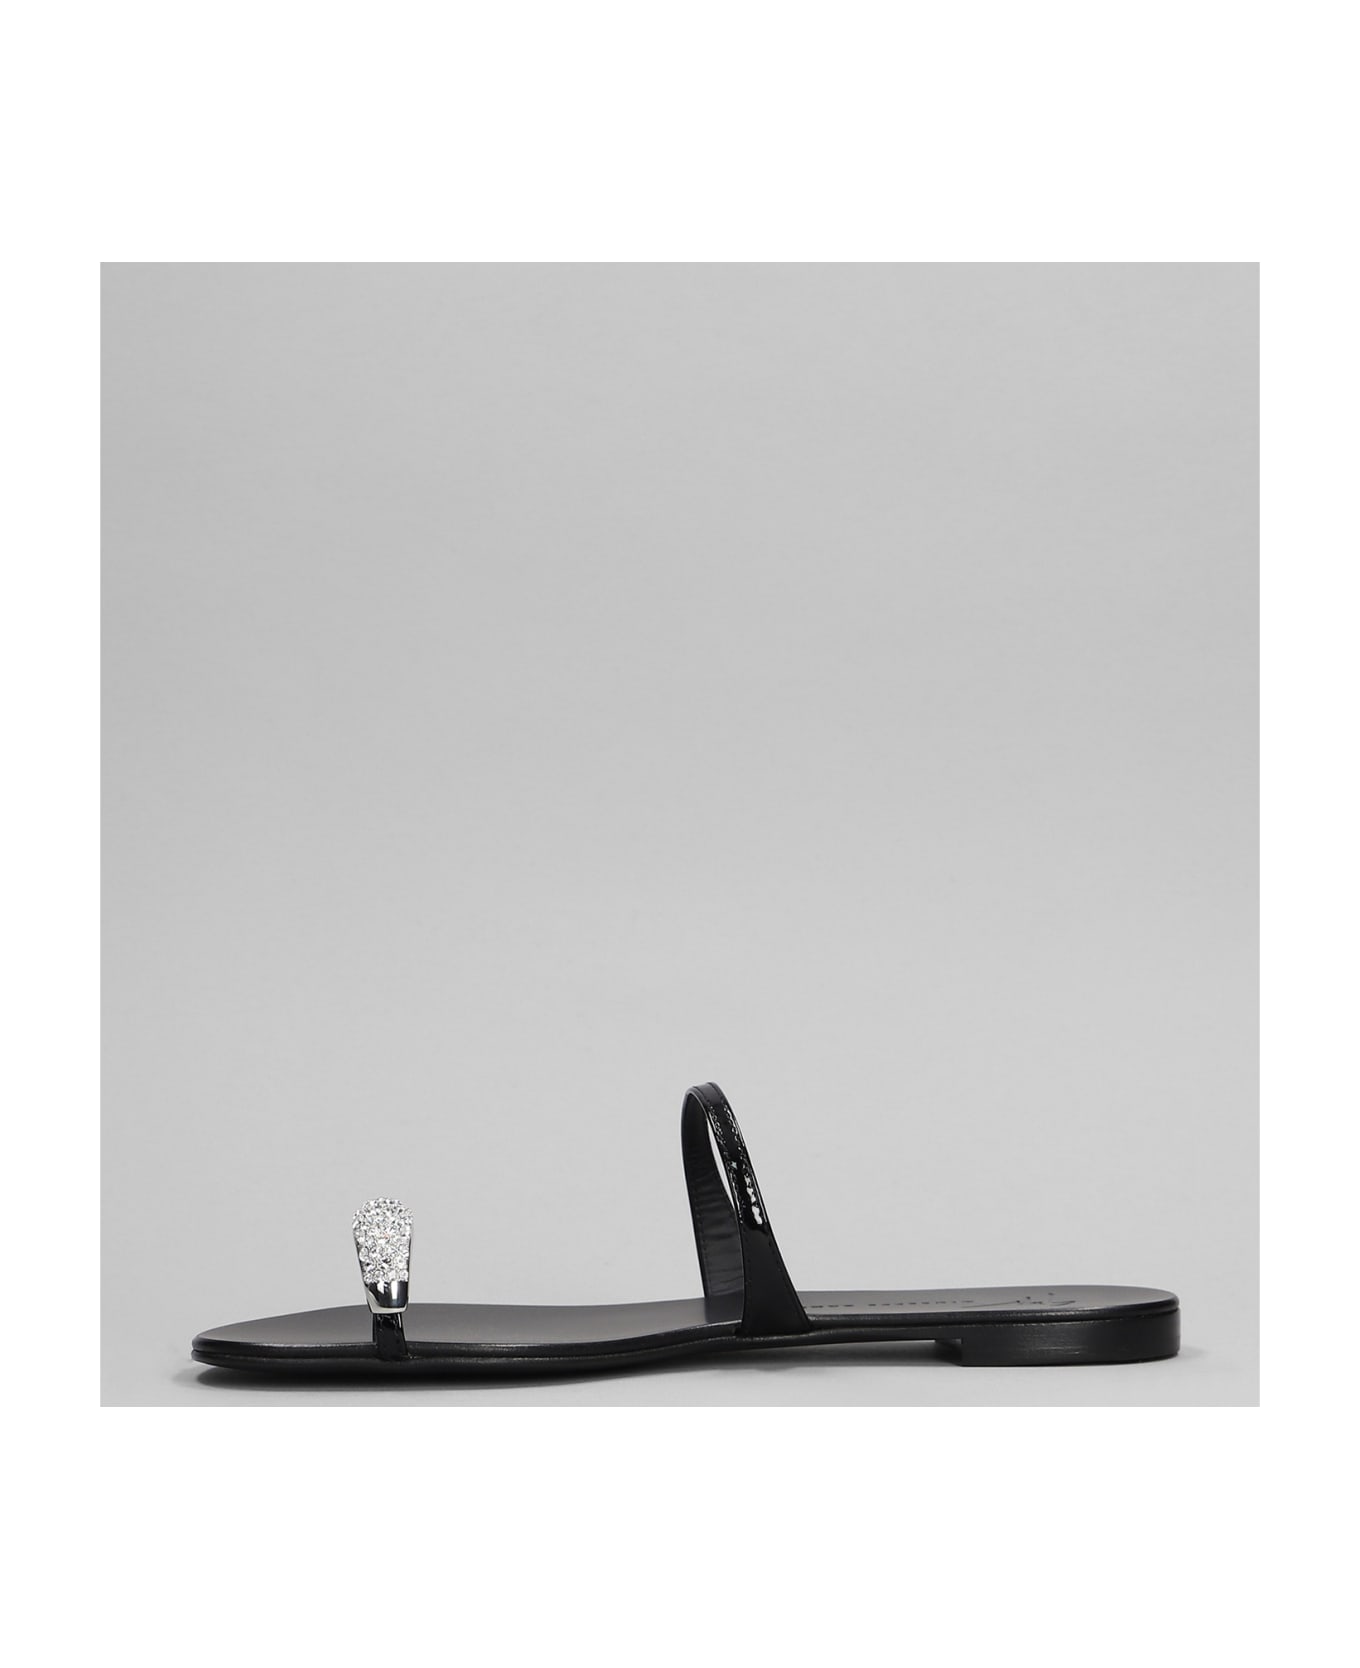 Giuseppe Zanotti Ring Flats In Black Patent Leather - black